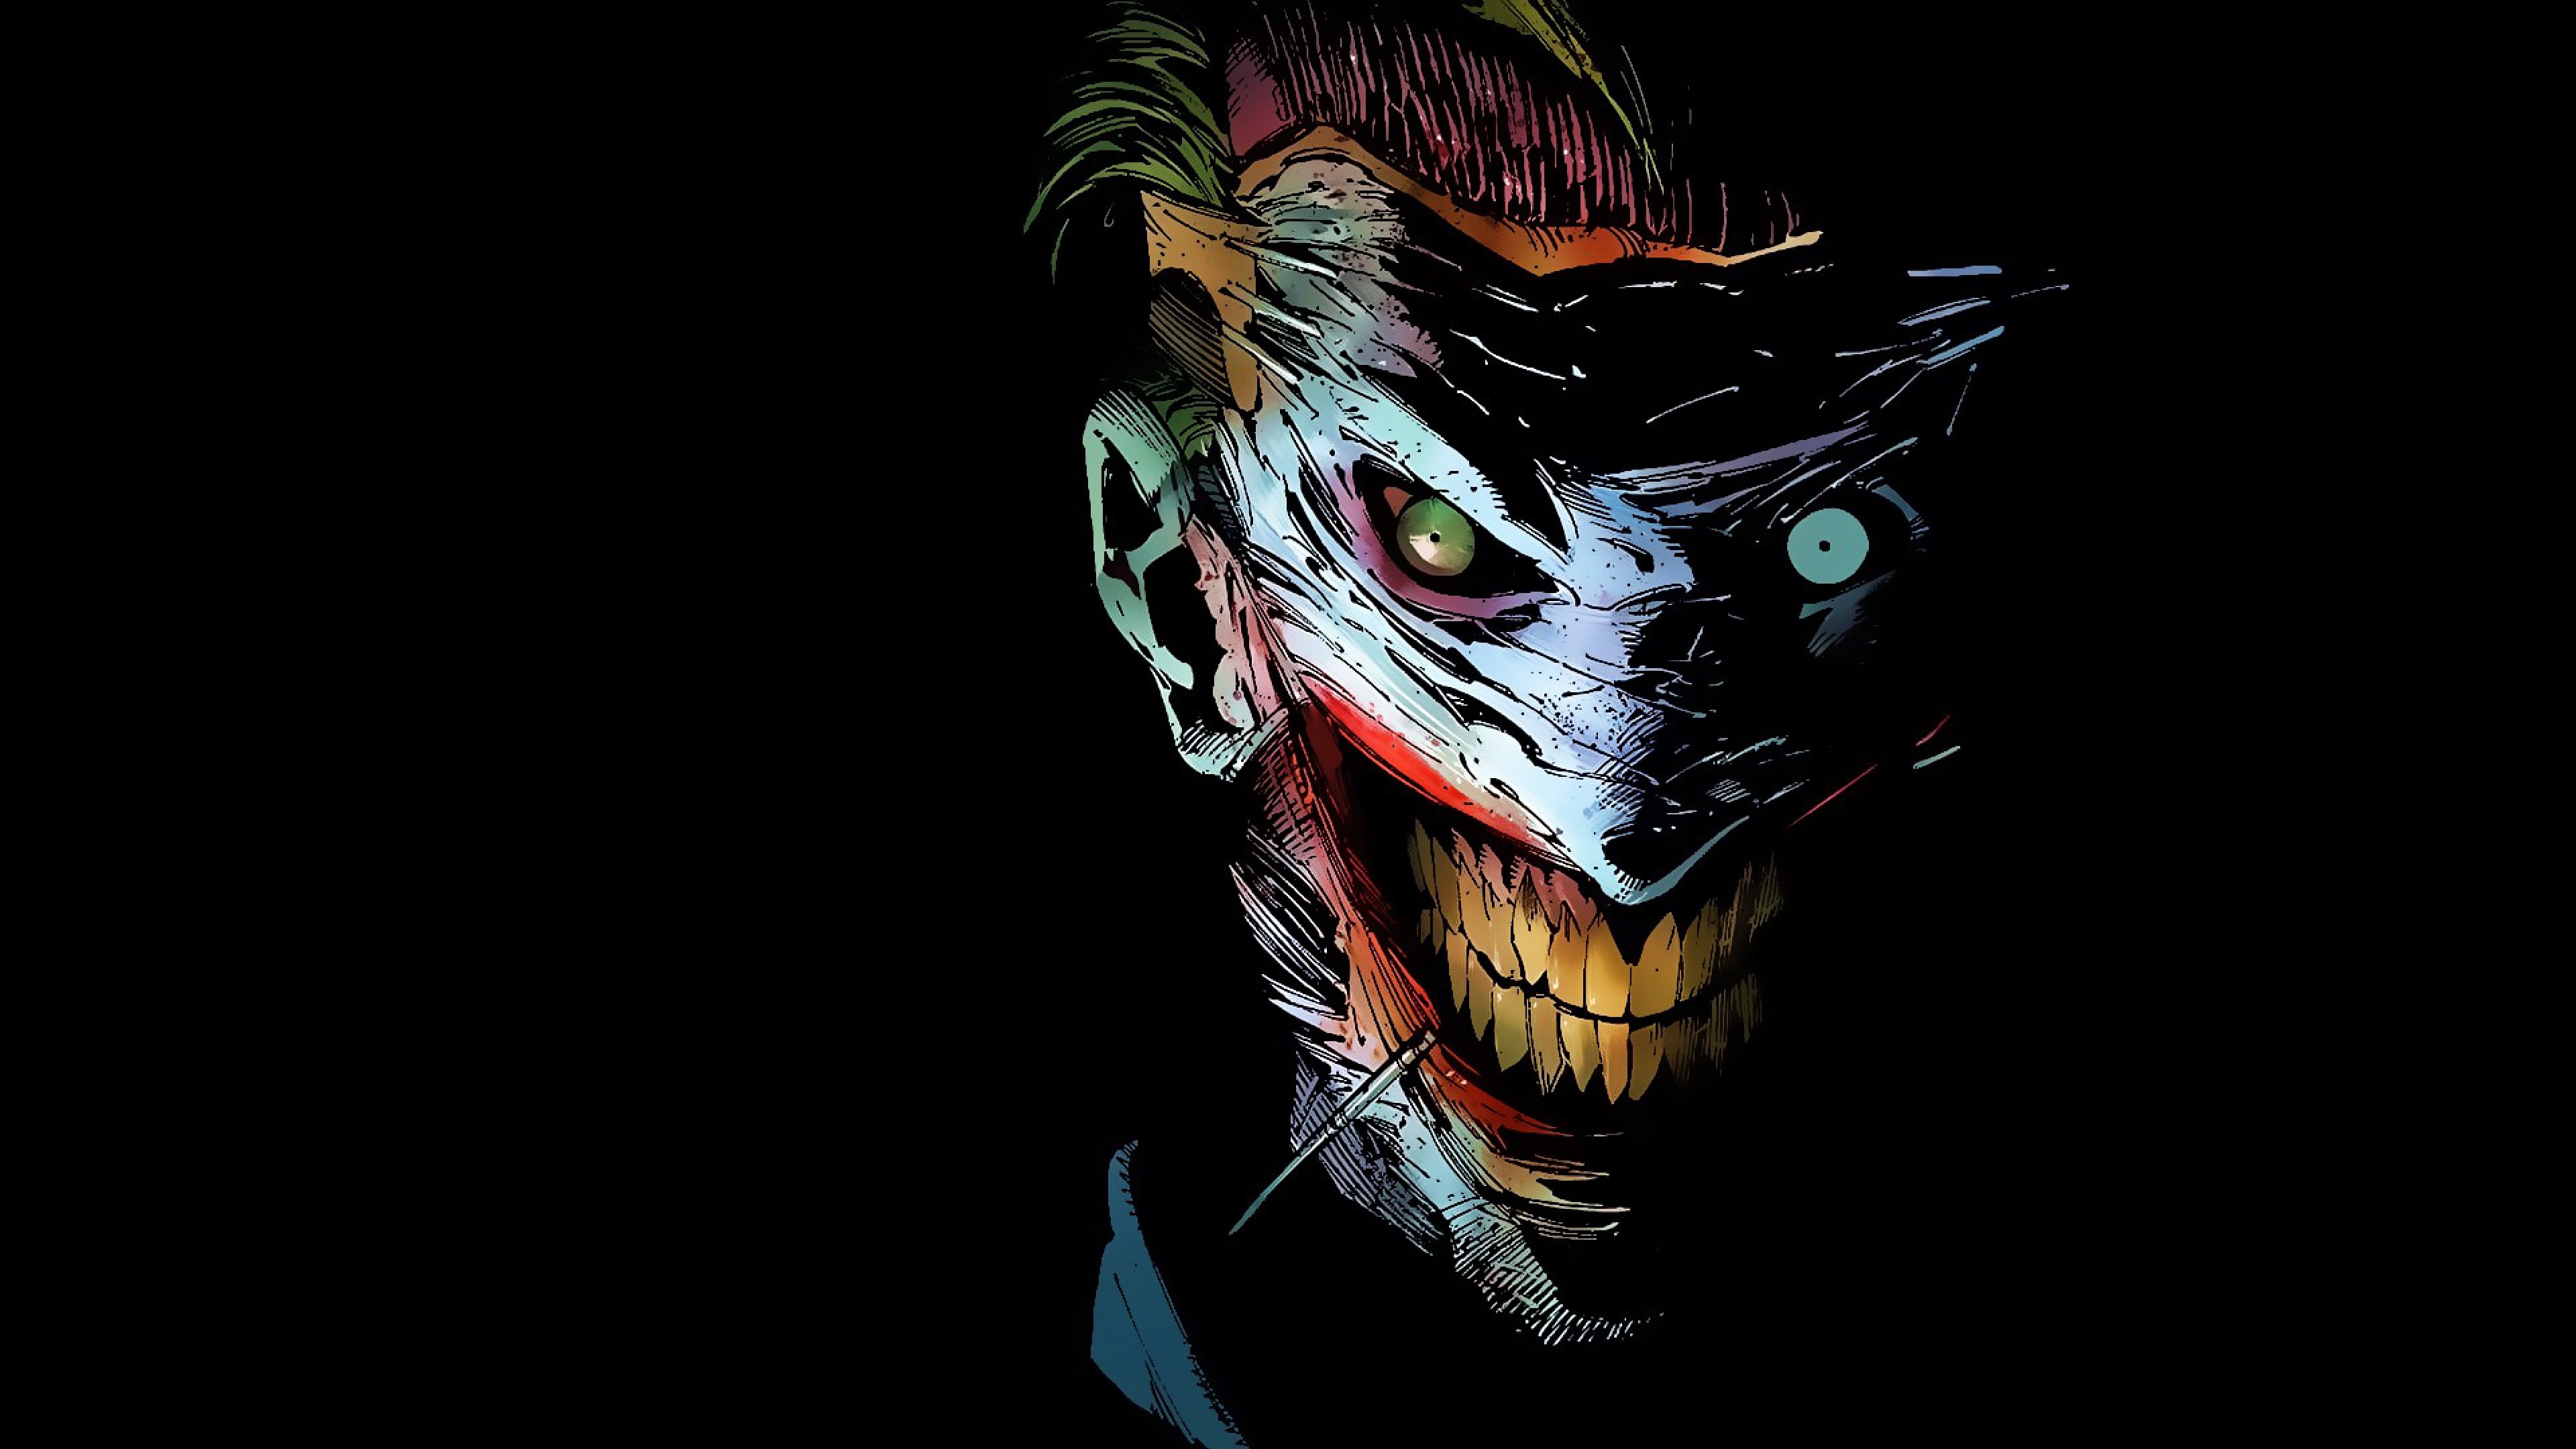 3840x2160 Best Joker Wallpapers | HD Wallpapers | Pinterest | Joker pictures,  Wallpaper and Devil